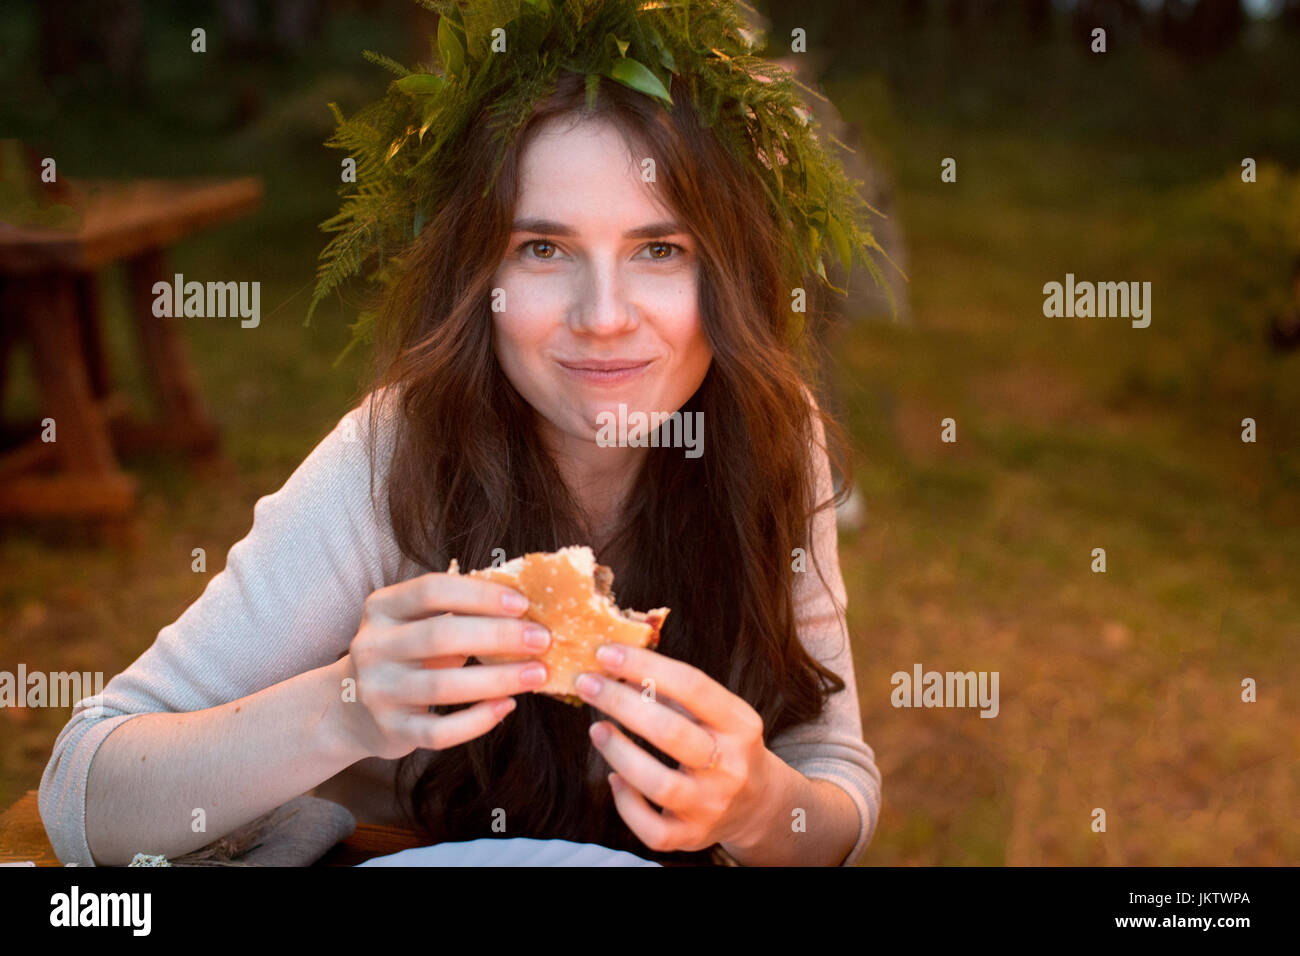 Delighted woman eating hamburger Stock Photo